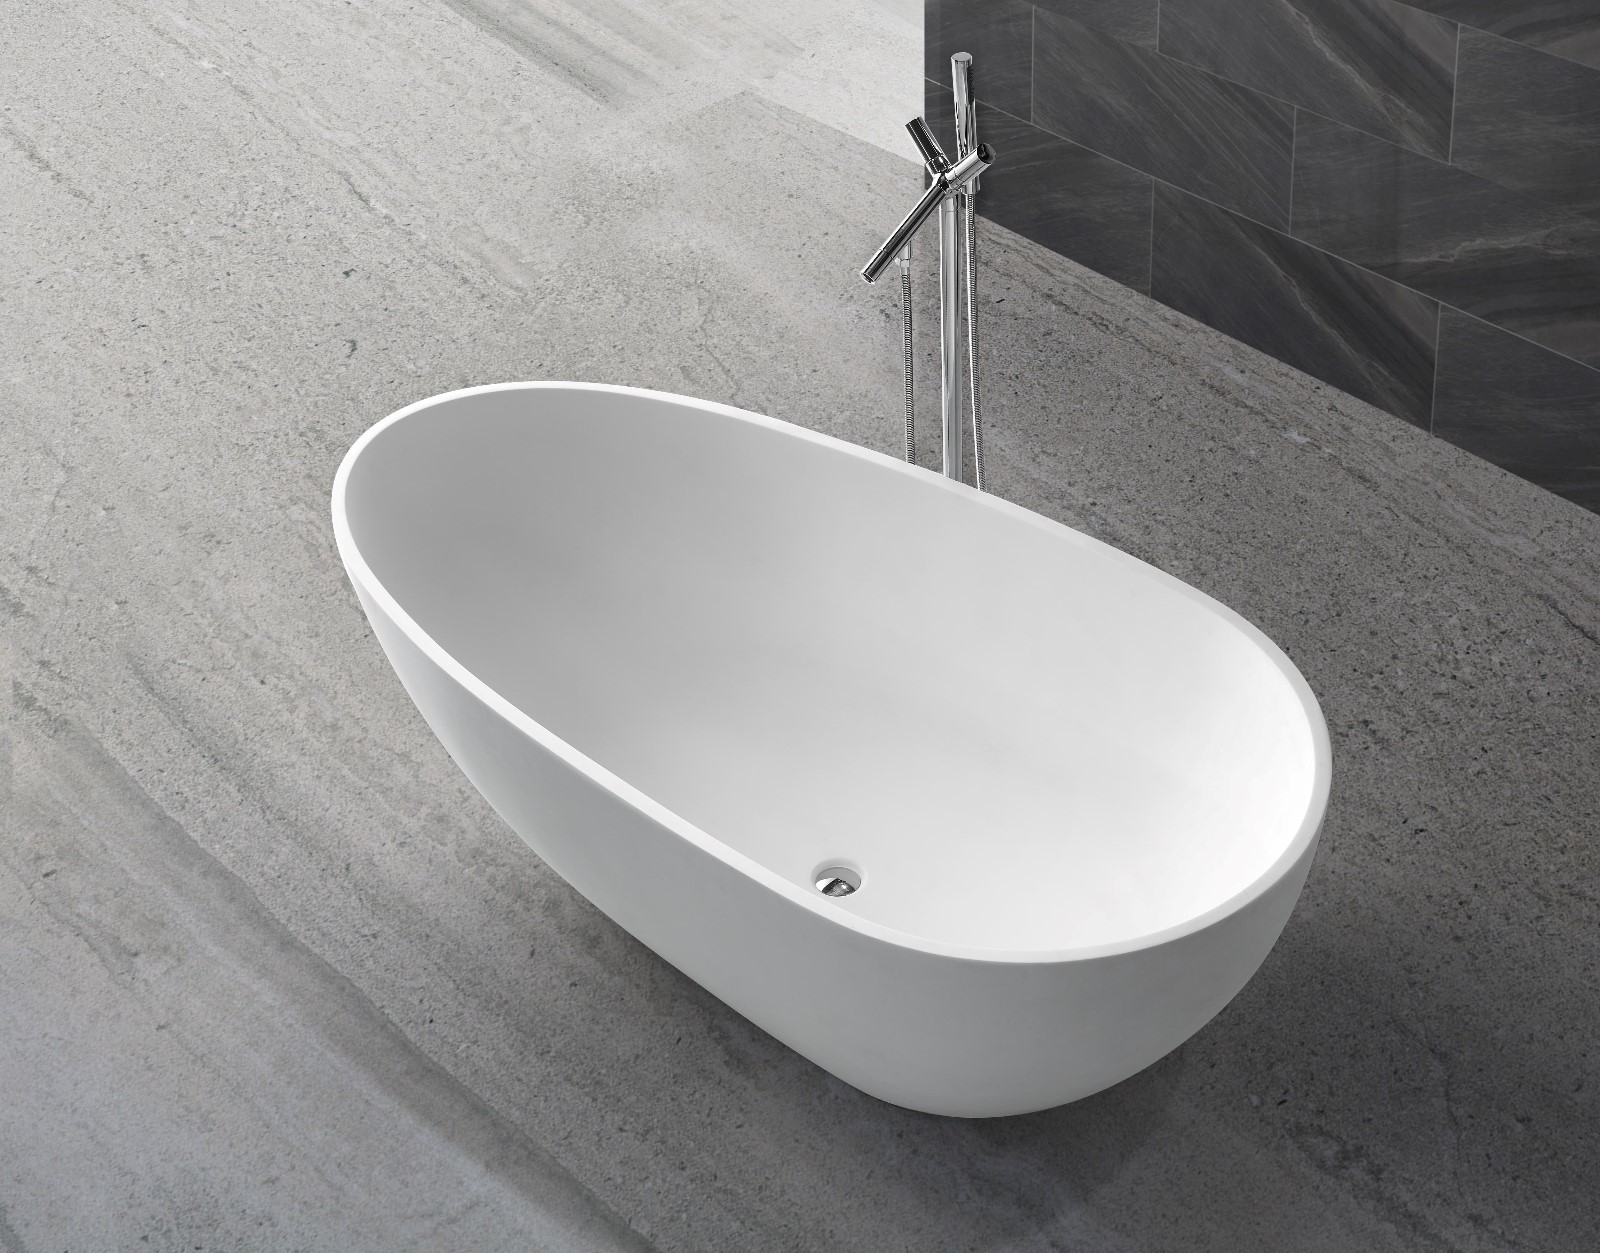 Wholesale stone solid surface bathtub KingKonree Brand